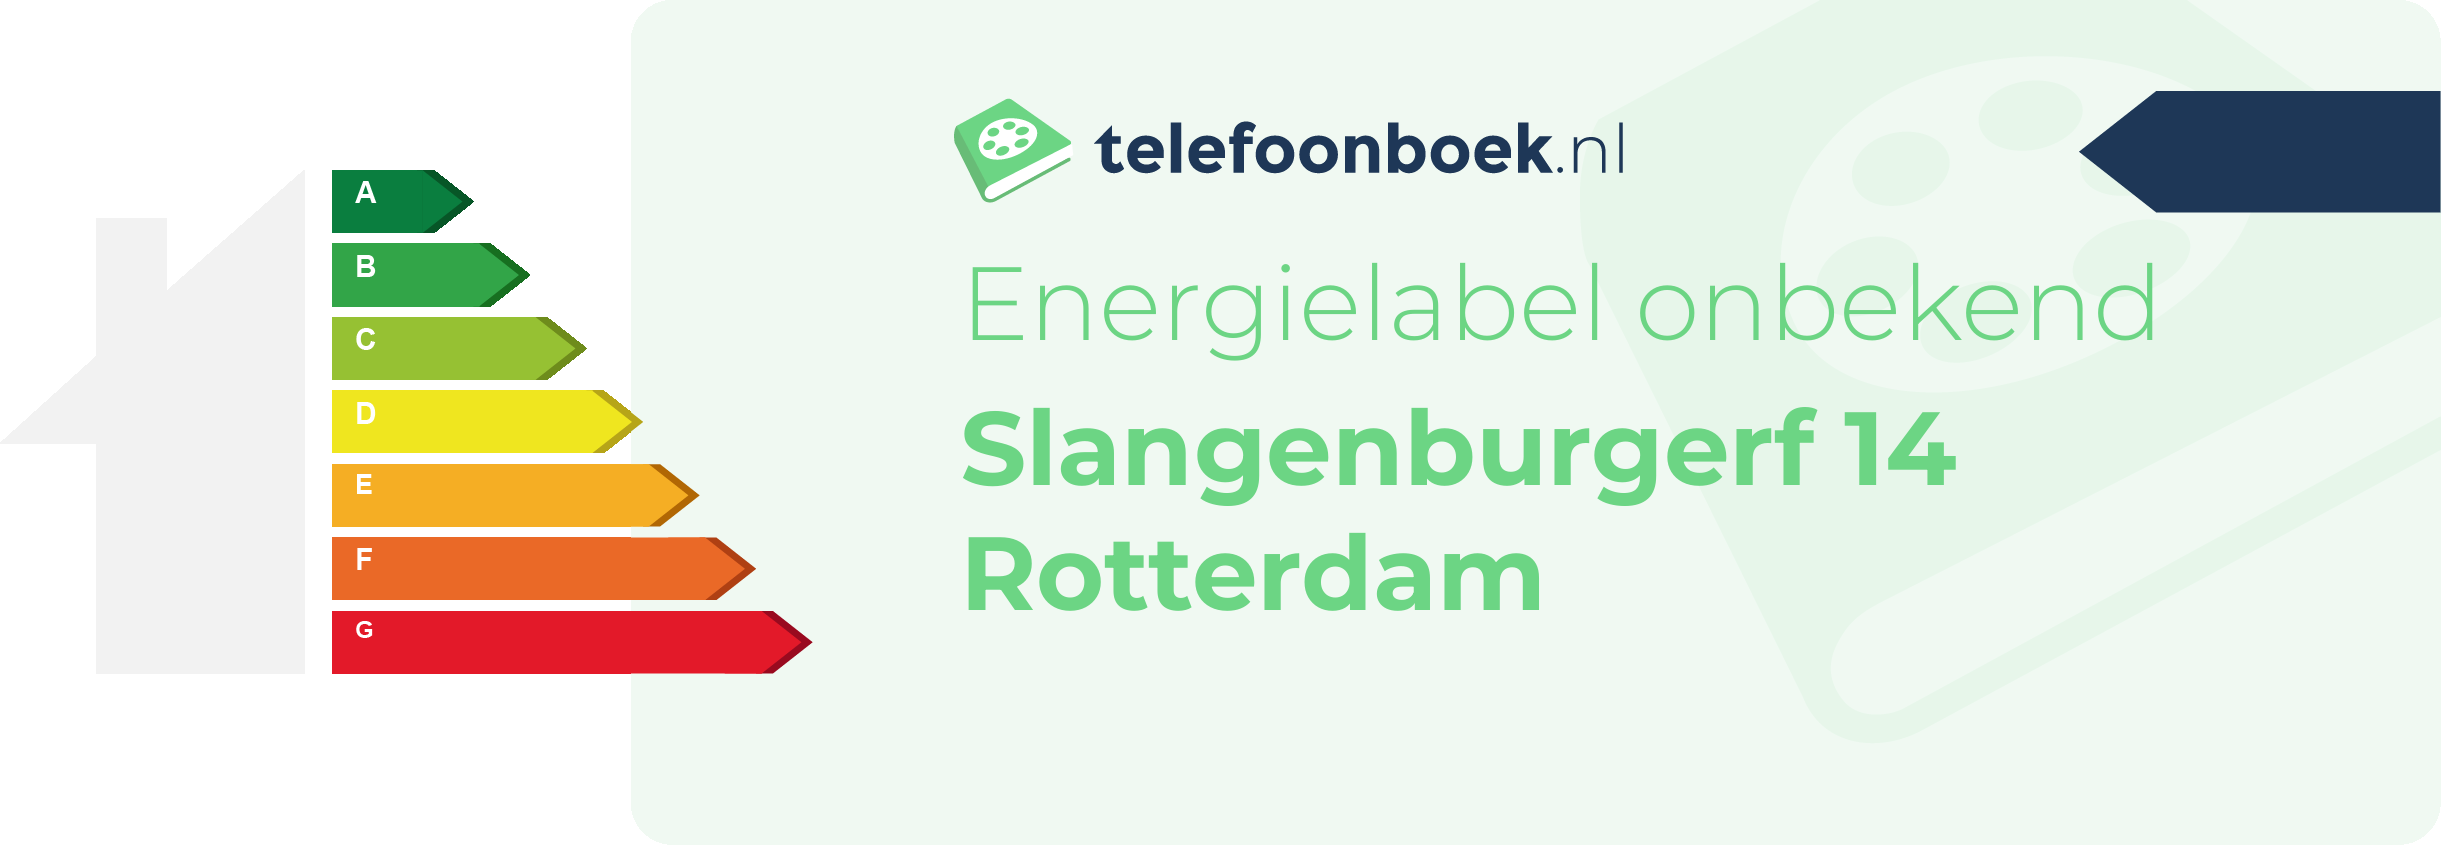 Energielabel Slangenburgerf 14 Rotterdam